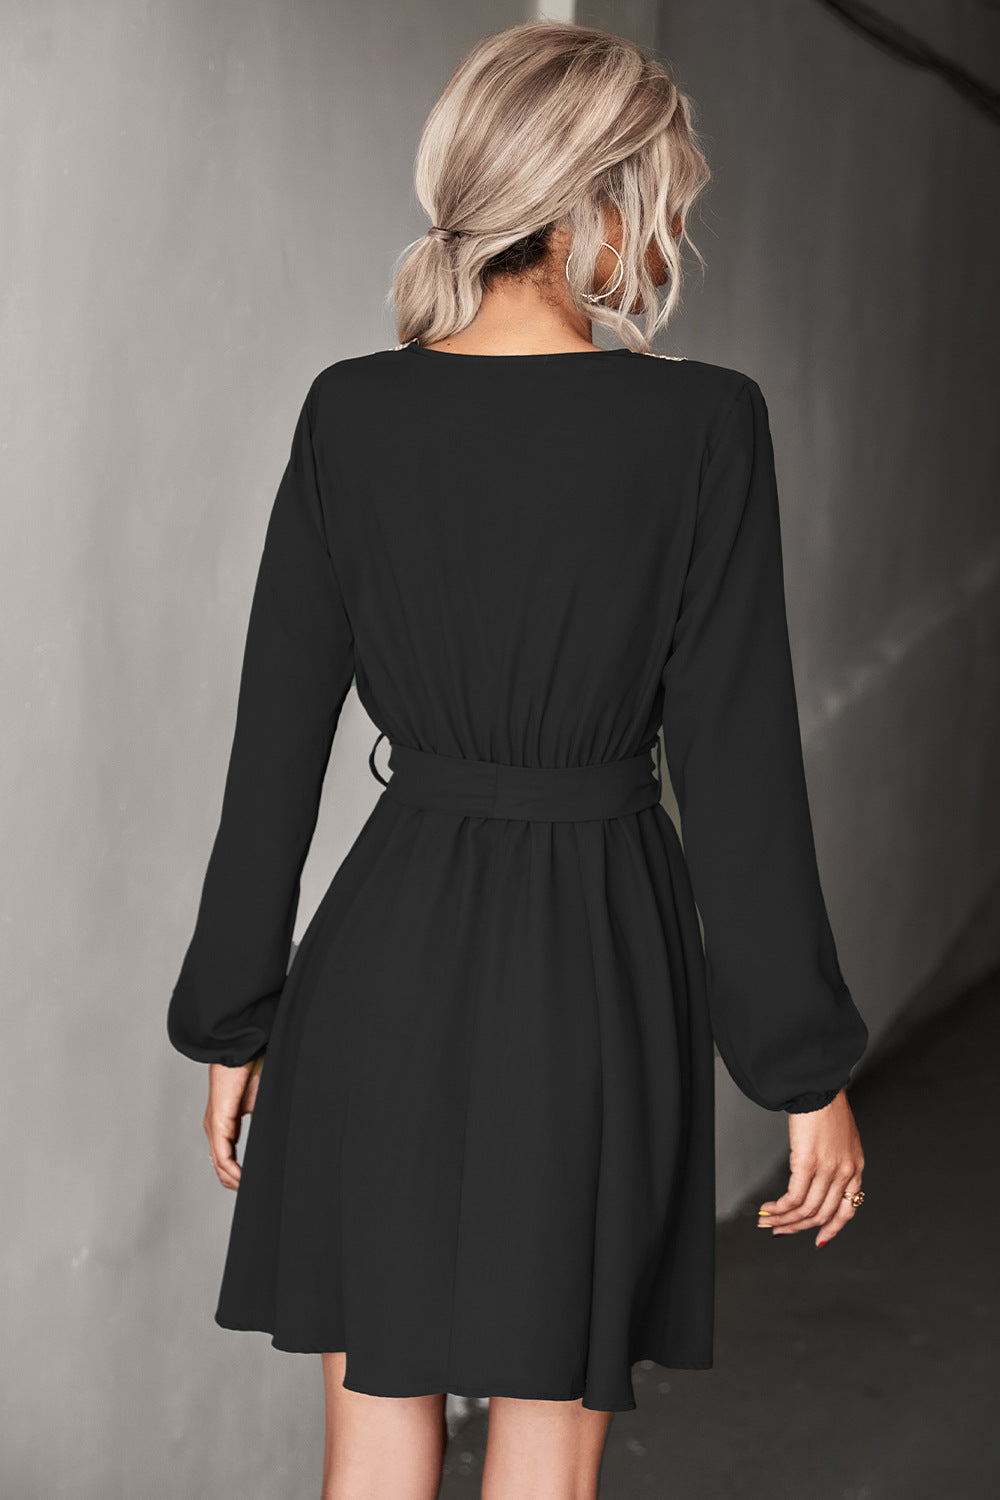 Fashion V Neck Long Sleeves Mini Dresses-Dresses-Free Shipping at meselling99